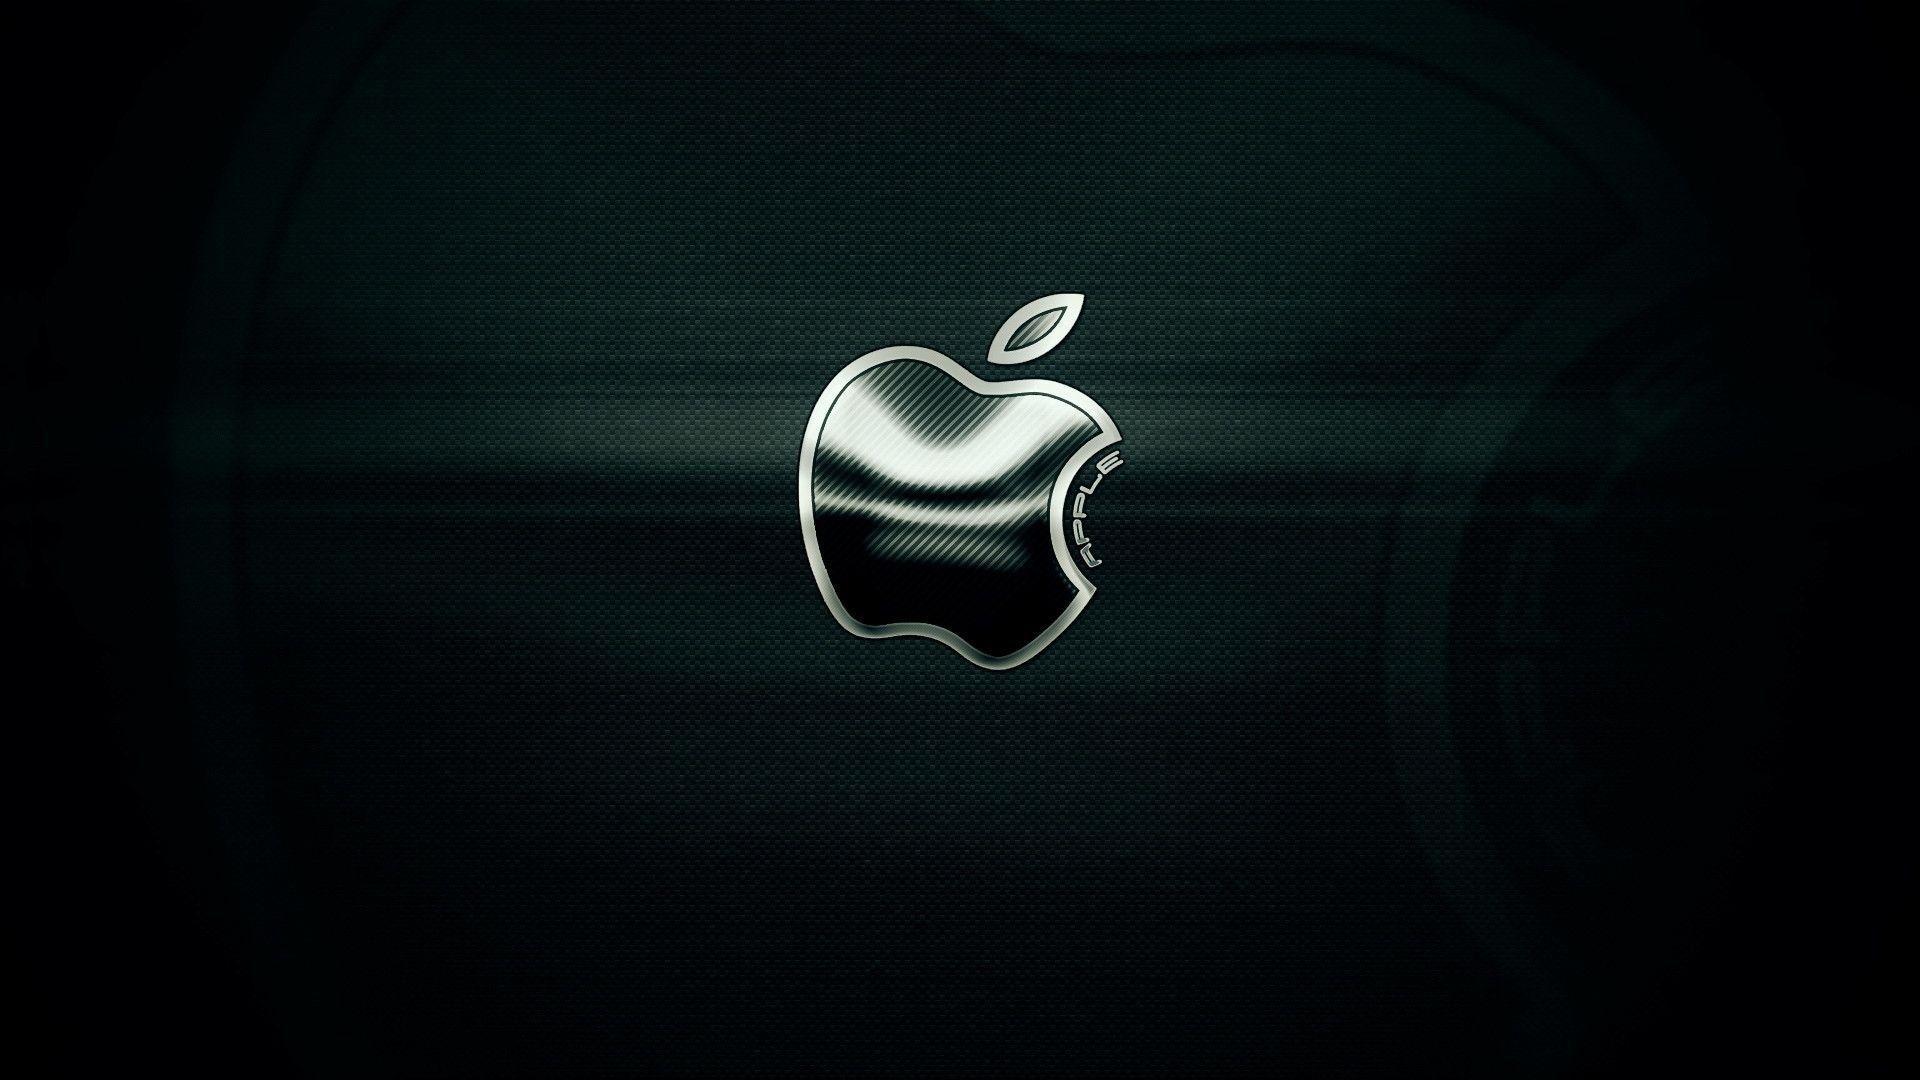 Wallpaper.wiki Apple 3D Logo Background HD PIC WPD003888. Wallpaper